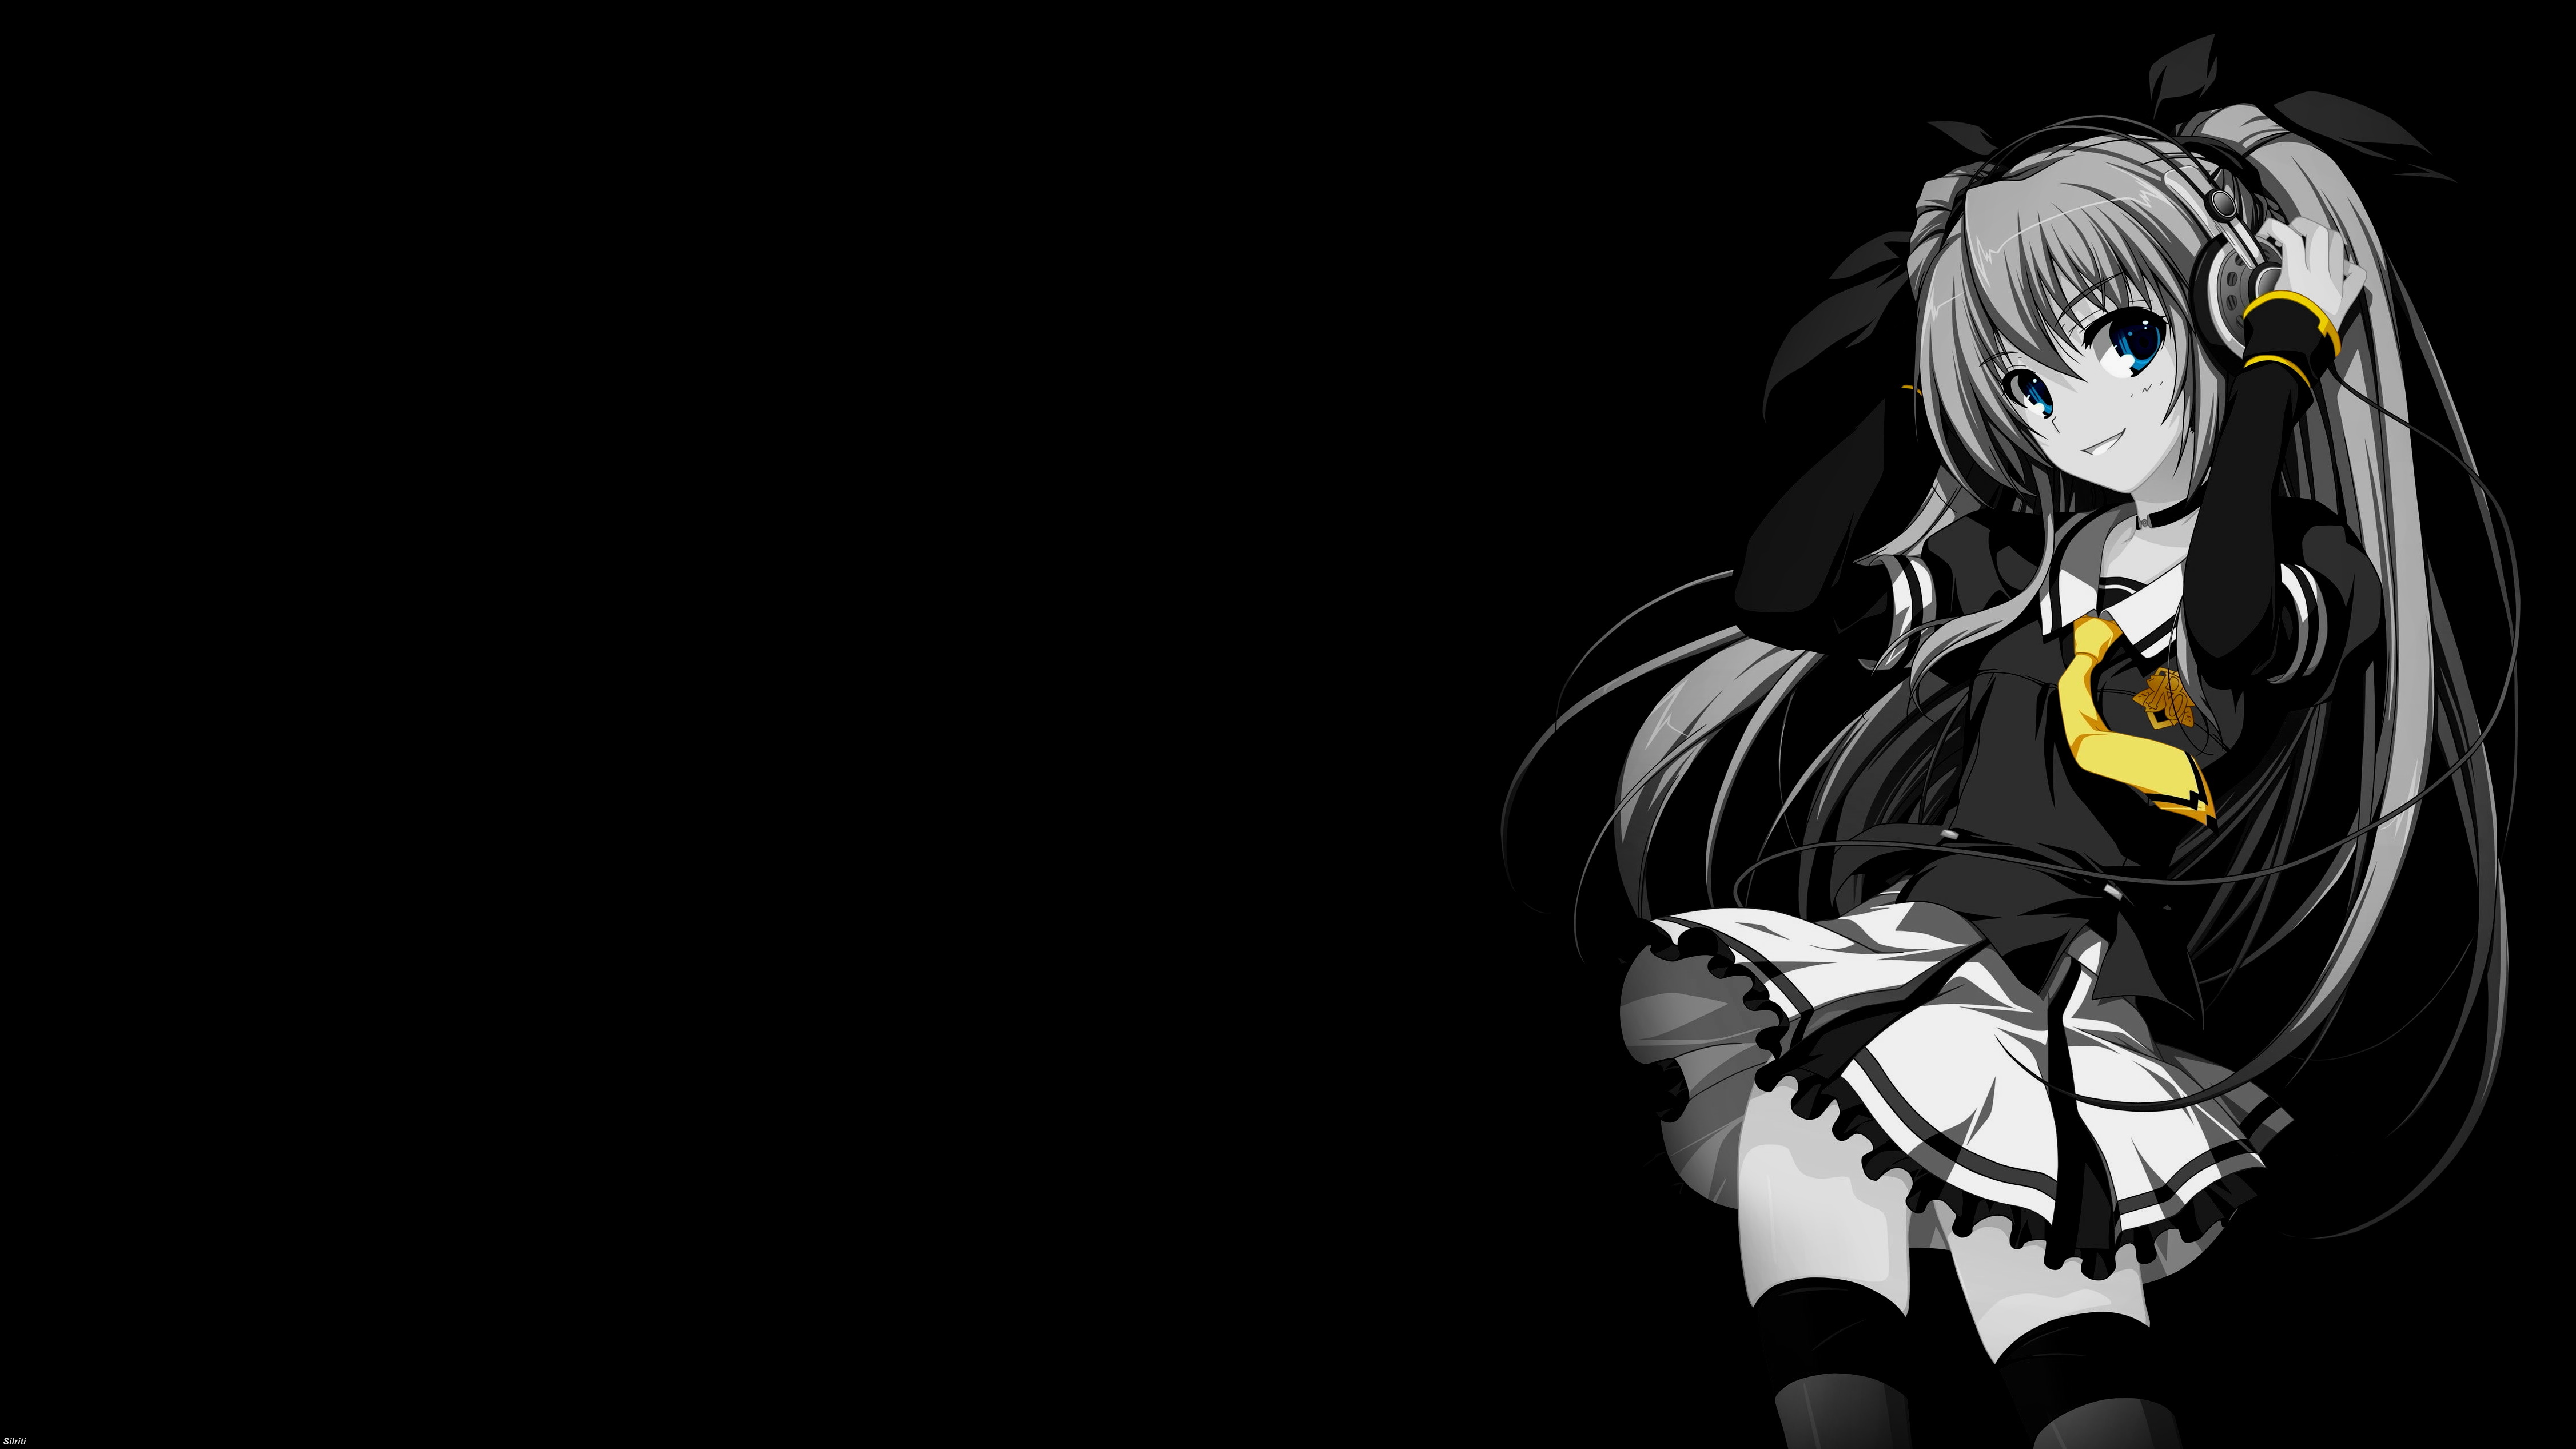 Anime 4505x2534 selective coloring black background simple background dark background anime girls school uniform headphones schoolgirl stockings